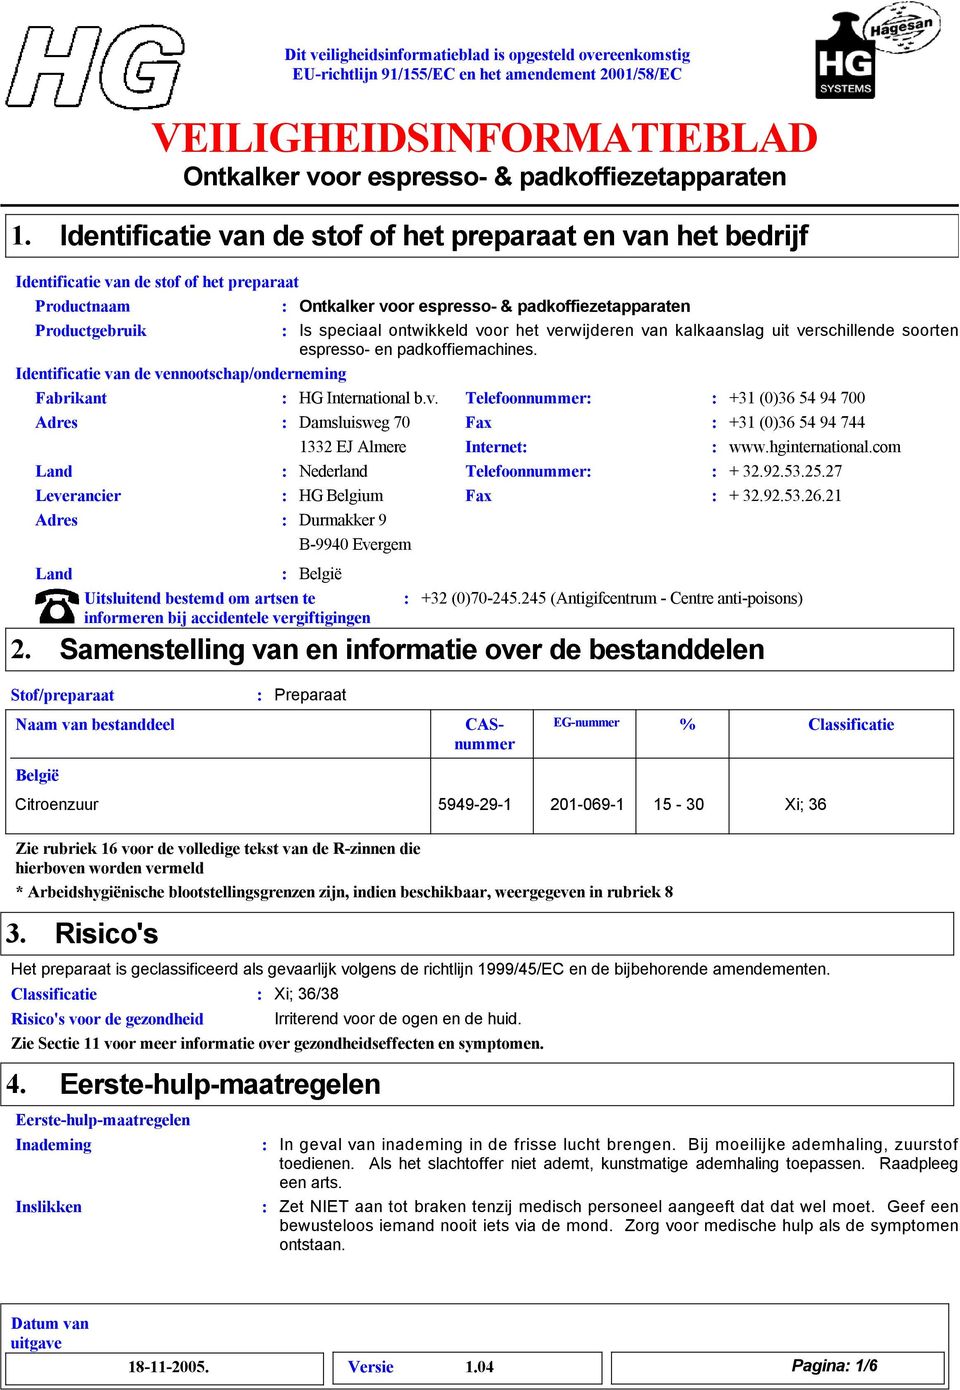 hginternational.com Land Nederland Telefoonnummer + 32.92.53.25.27 Leverancier HG Belgium Fax + 32.92.53.26.21 Adres Durmakker 9 B9940 Evergem 2.